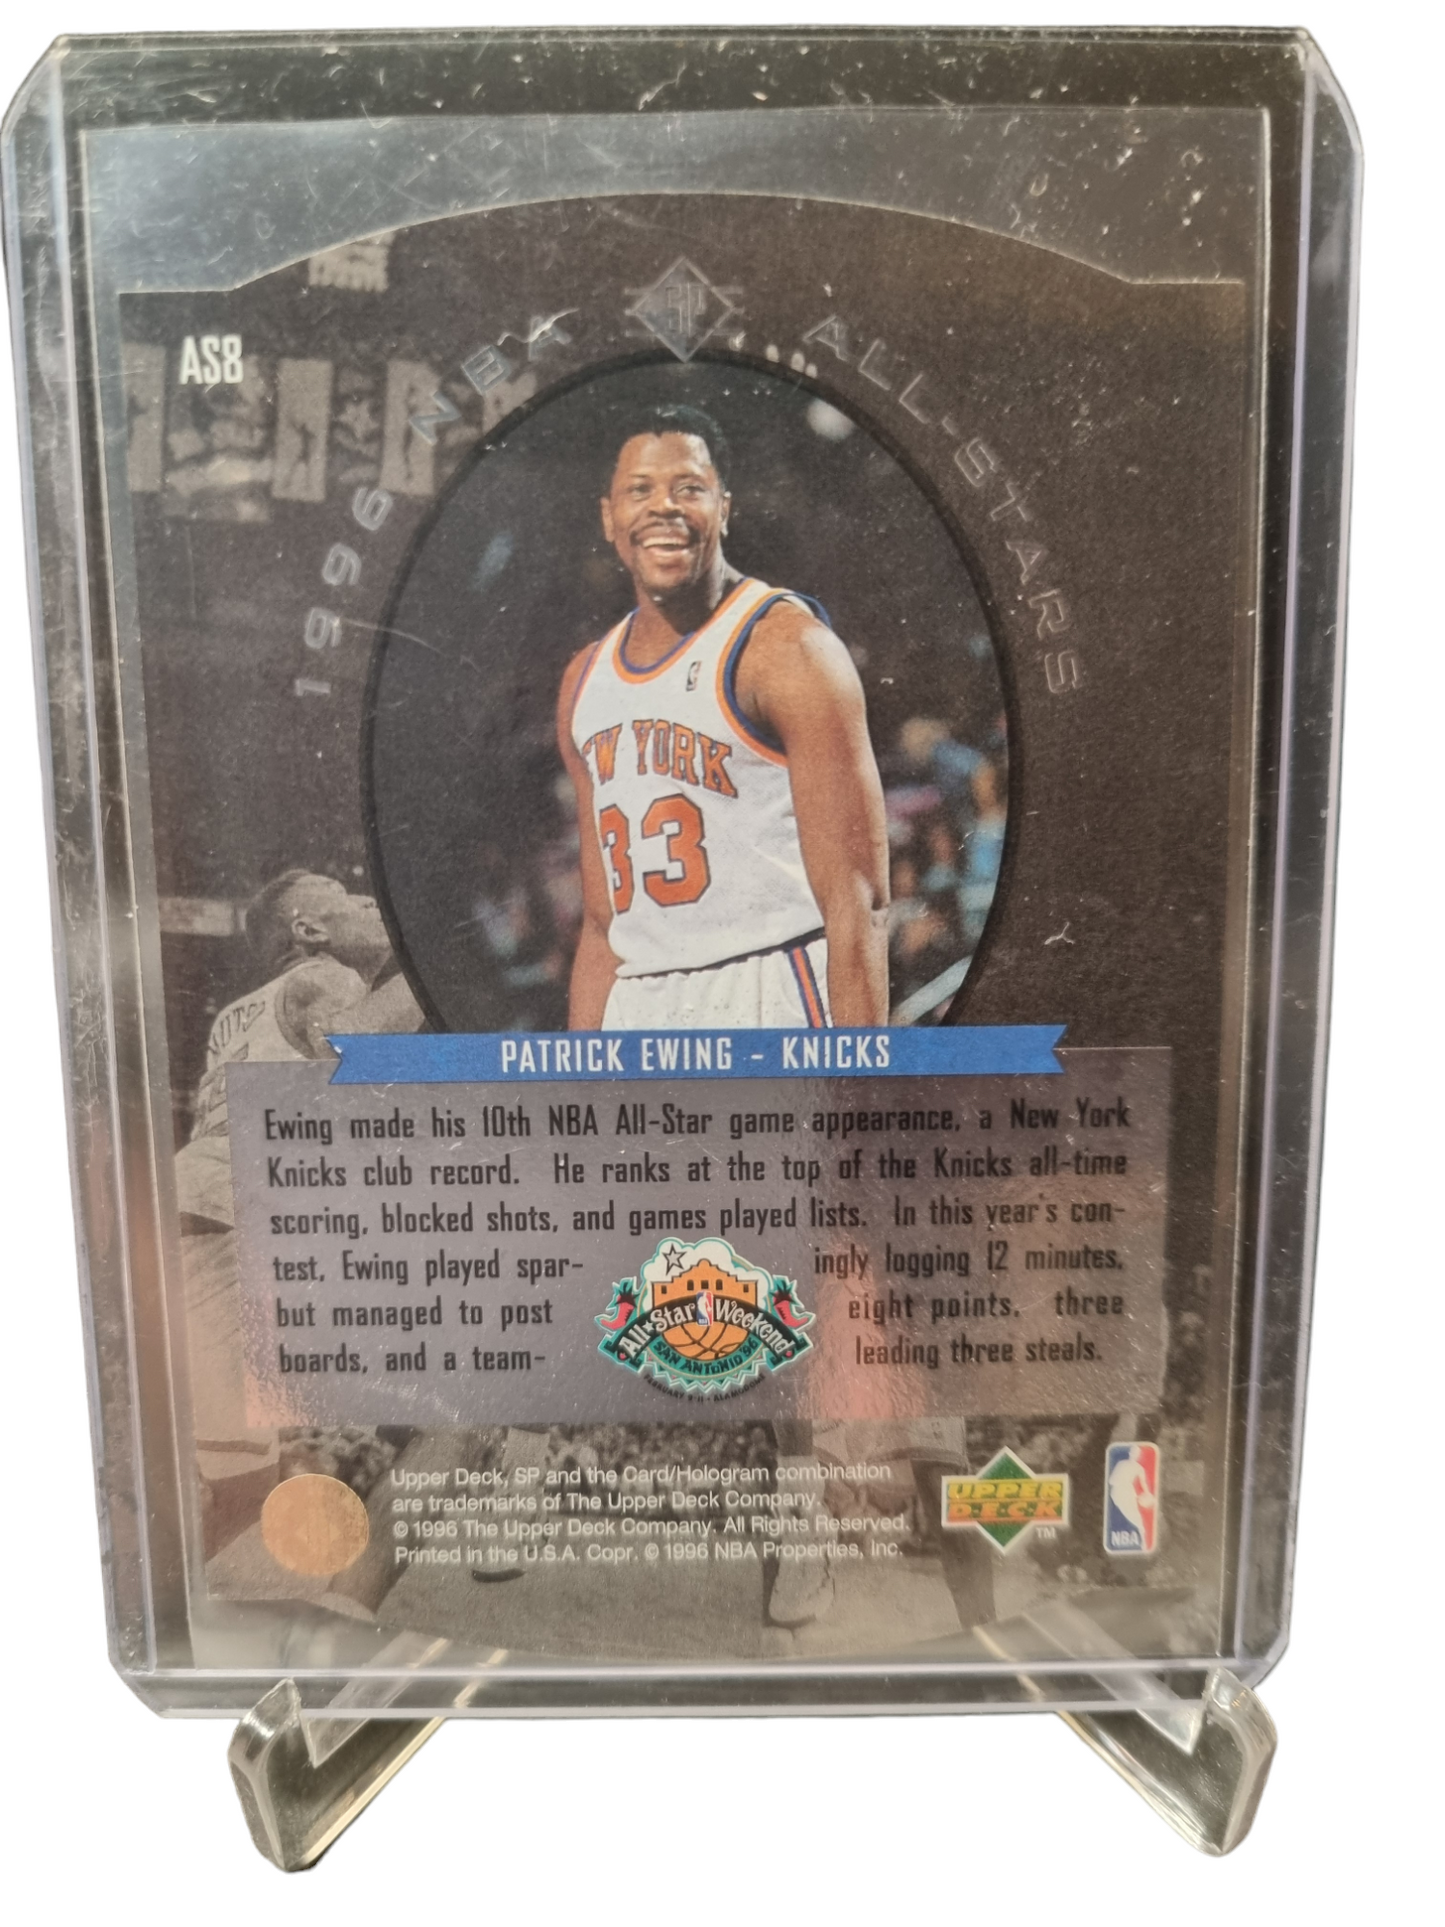 1996 Upper Deck #AS8 Patrick Ewing 1996 NBA All-Stars Silver Die Cut